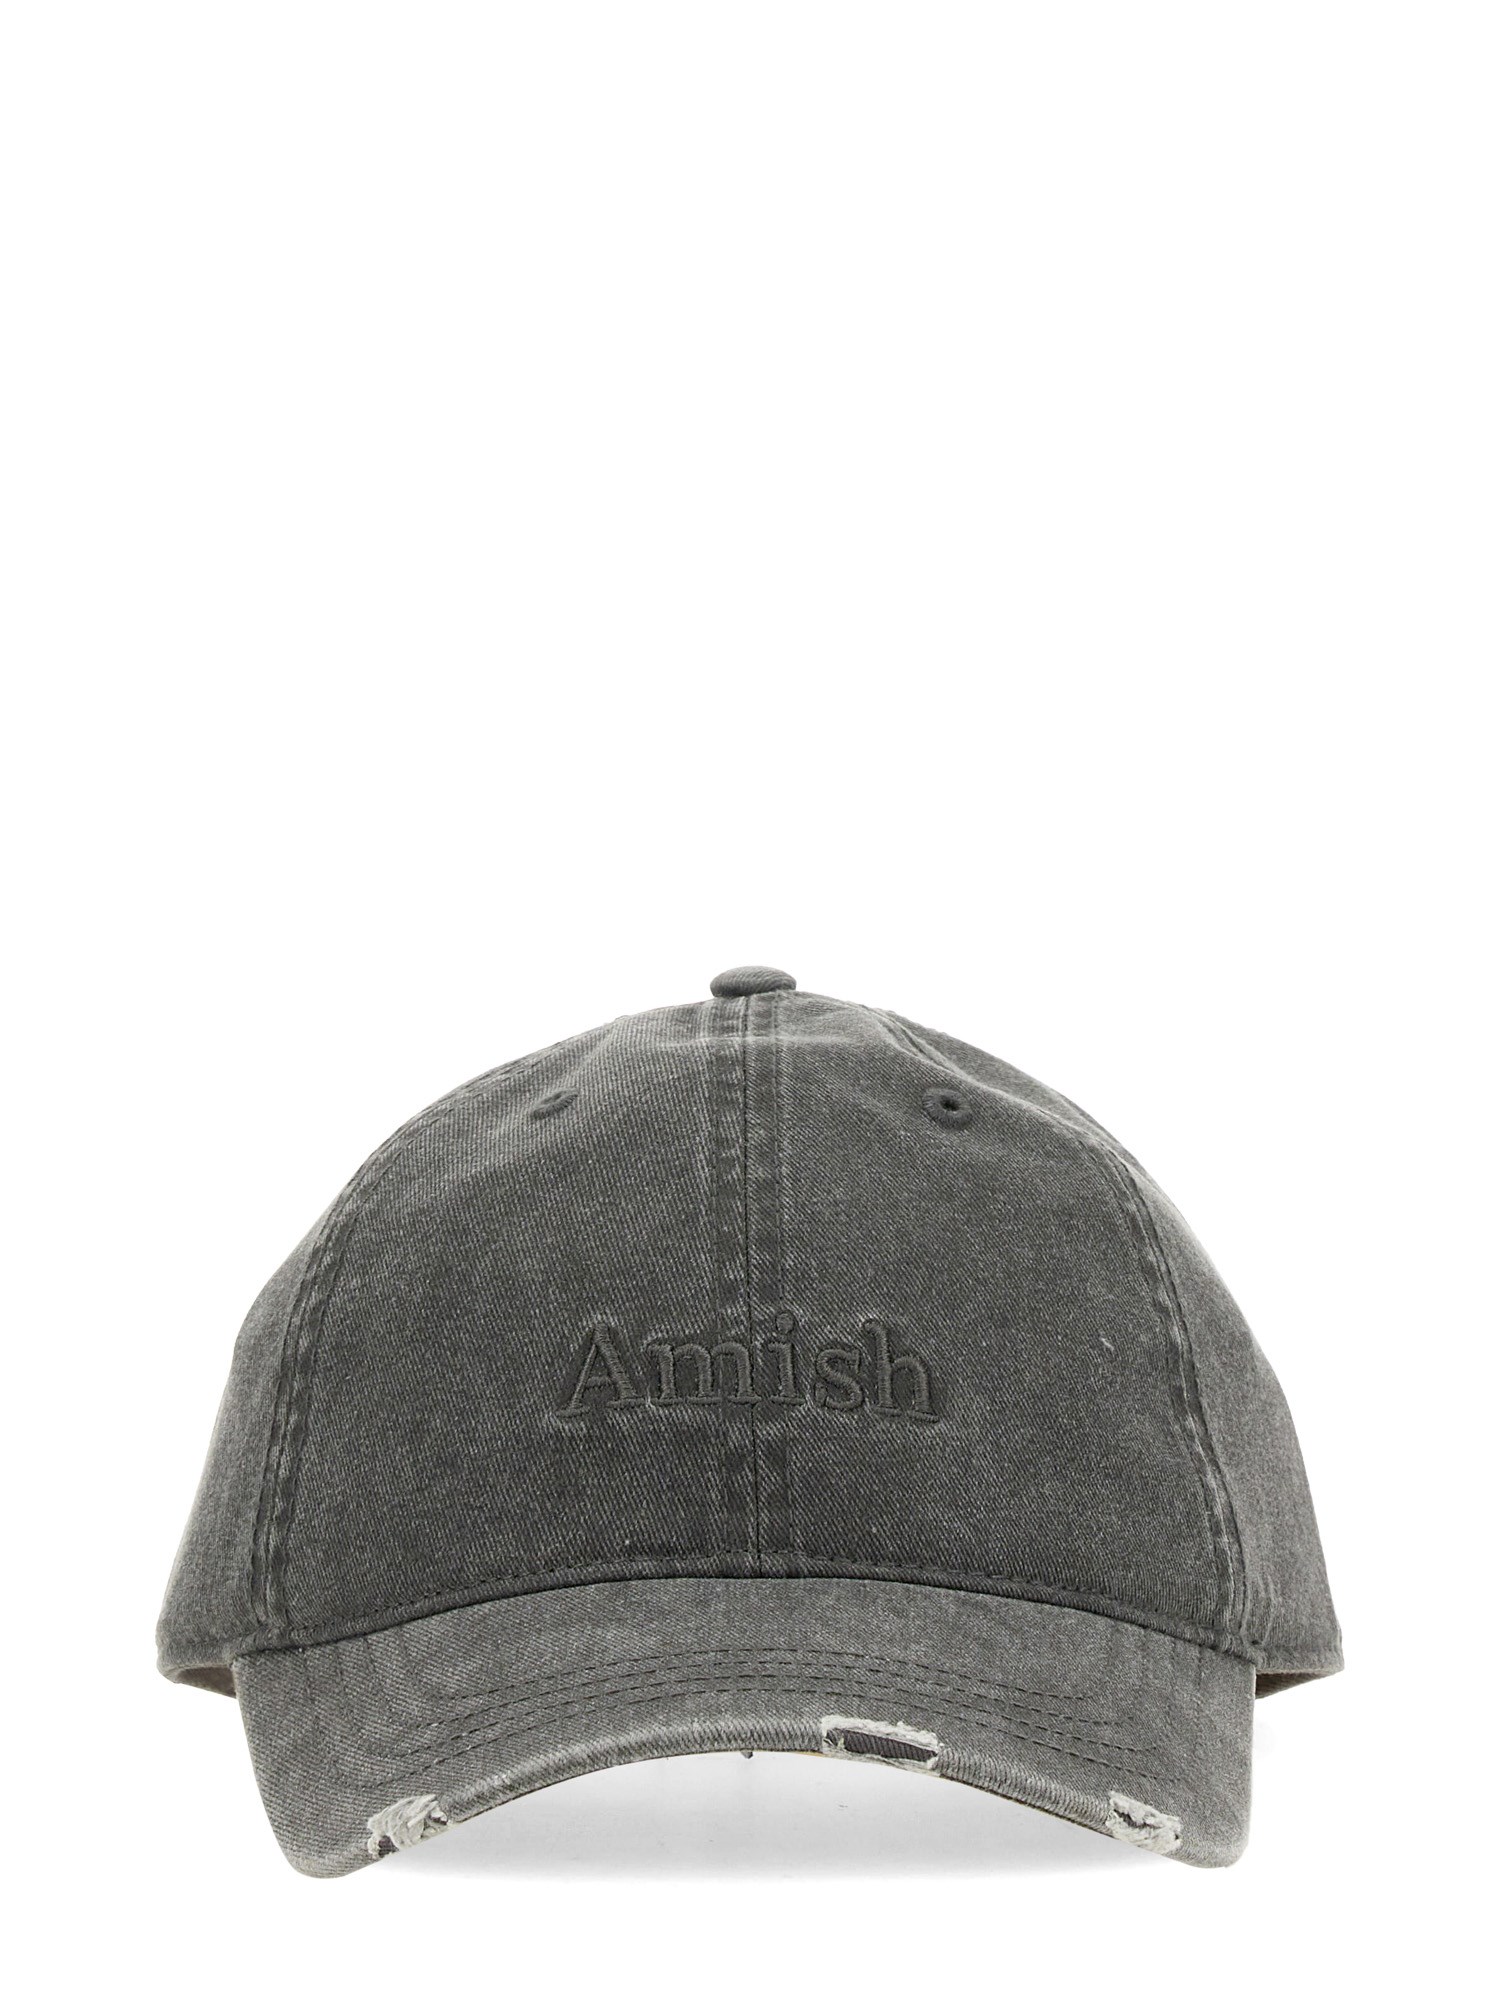 Amish amish baseball hat with logo